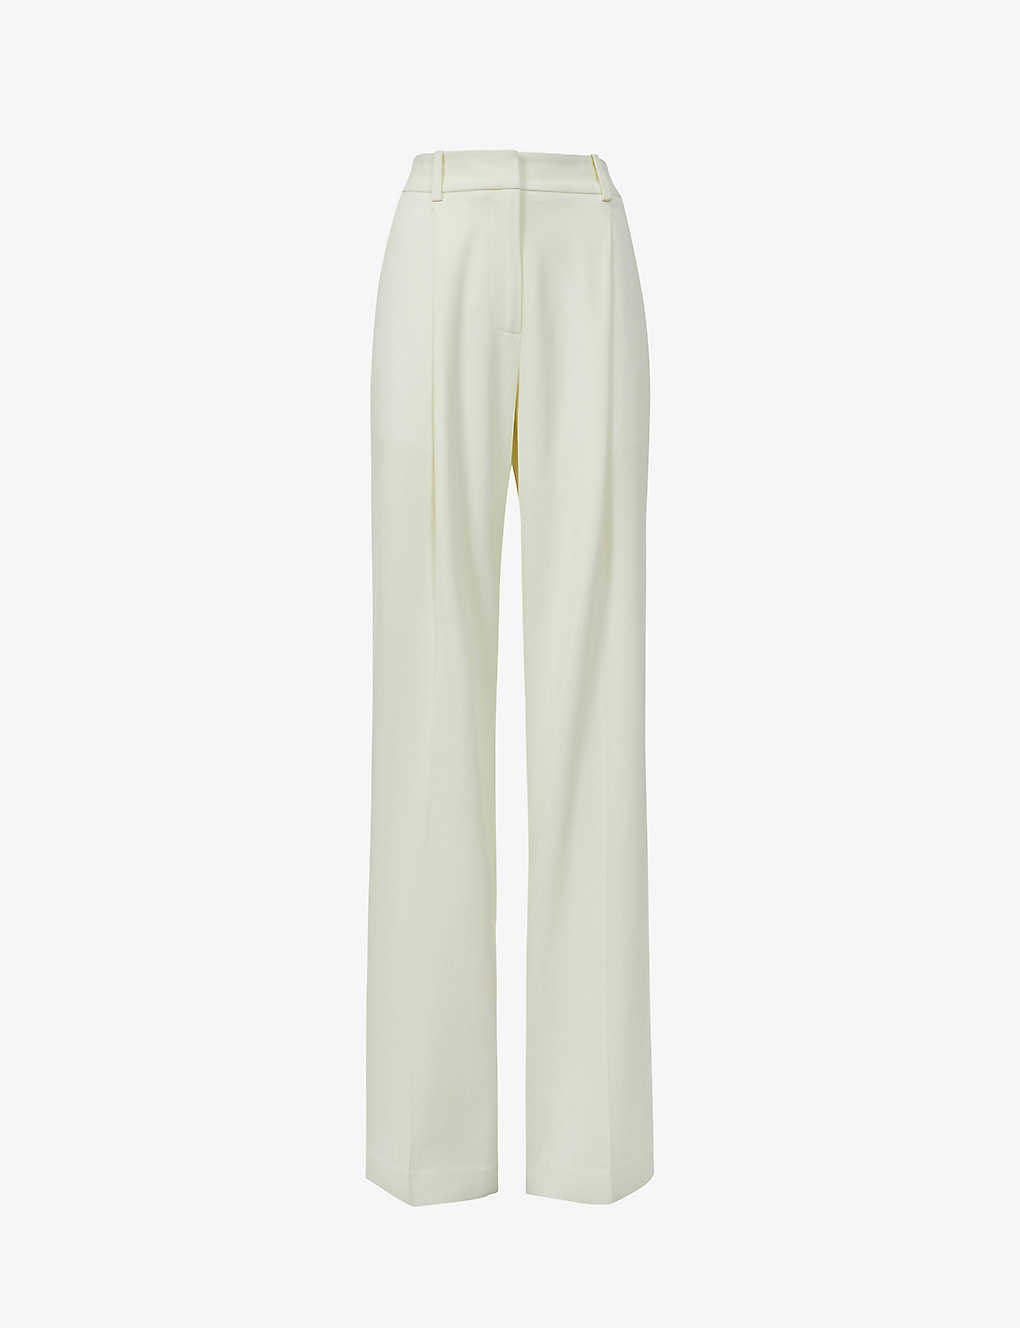 REISS - Liana mid-rise wide-leg stretch-woven trousers | Selfridges.com